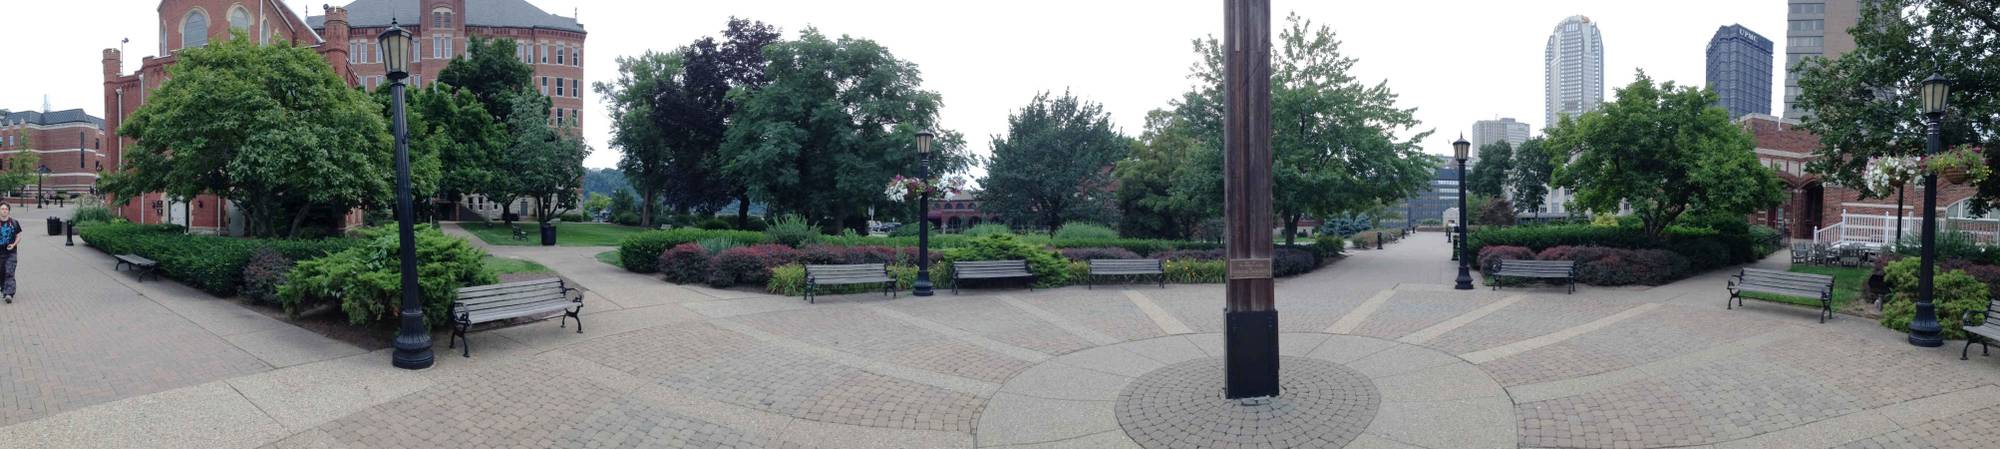 Panorama of Duquesne University park